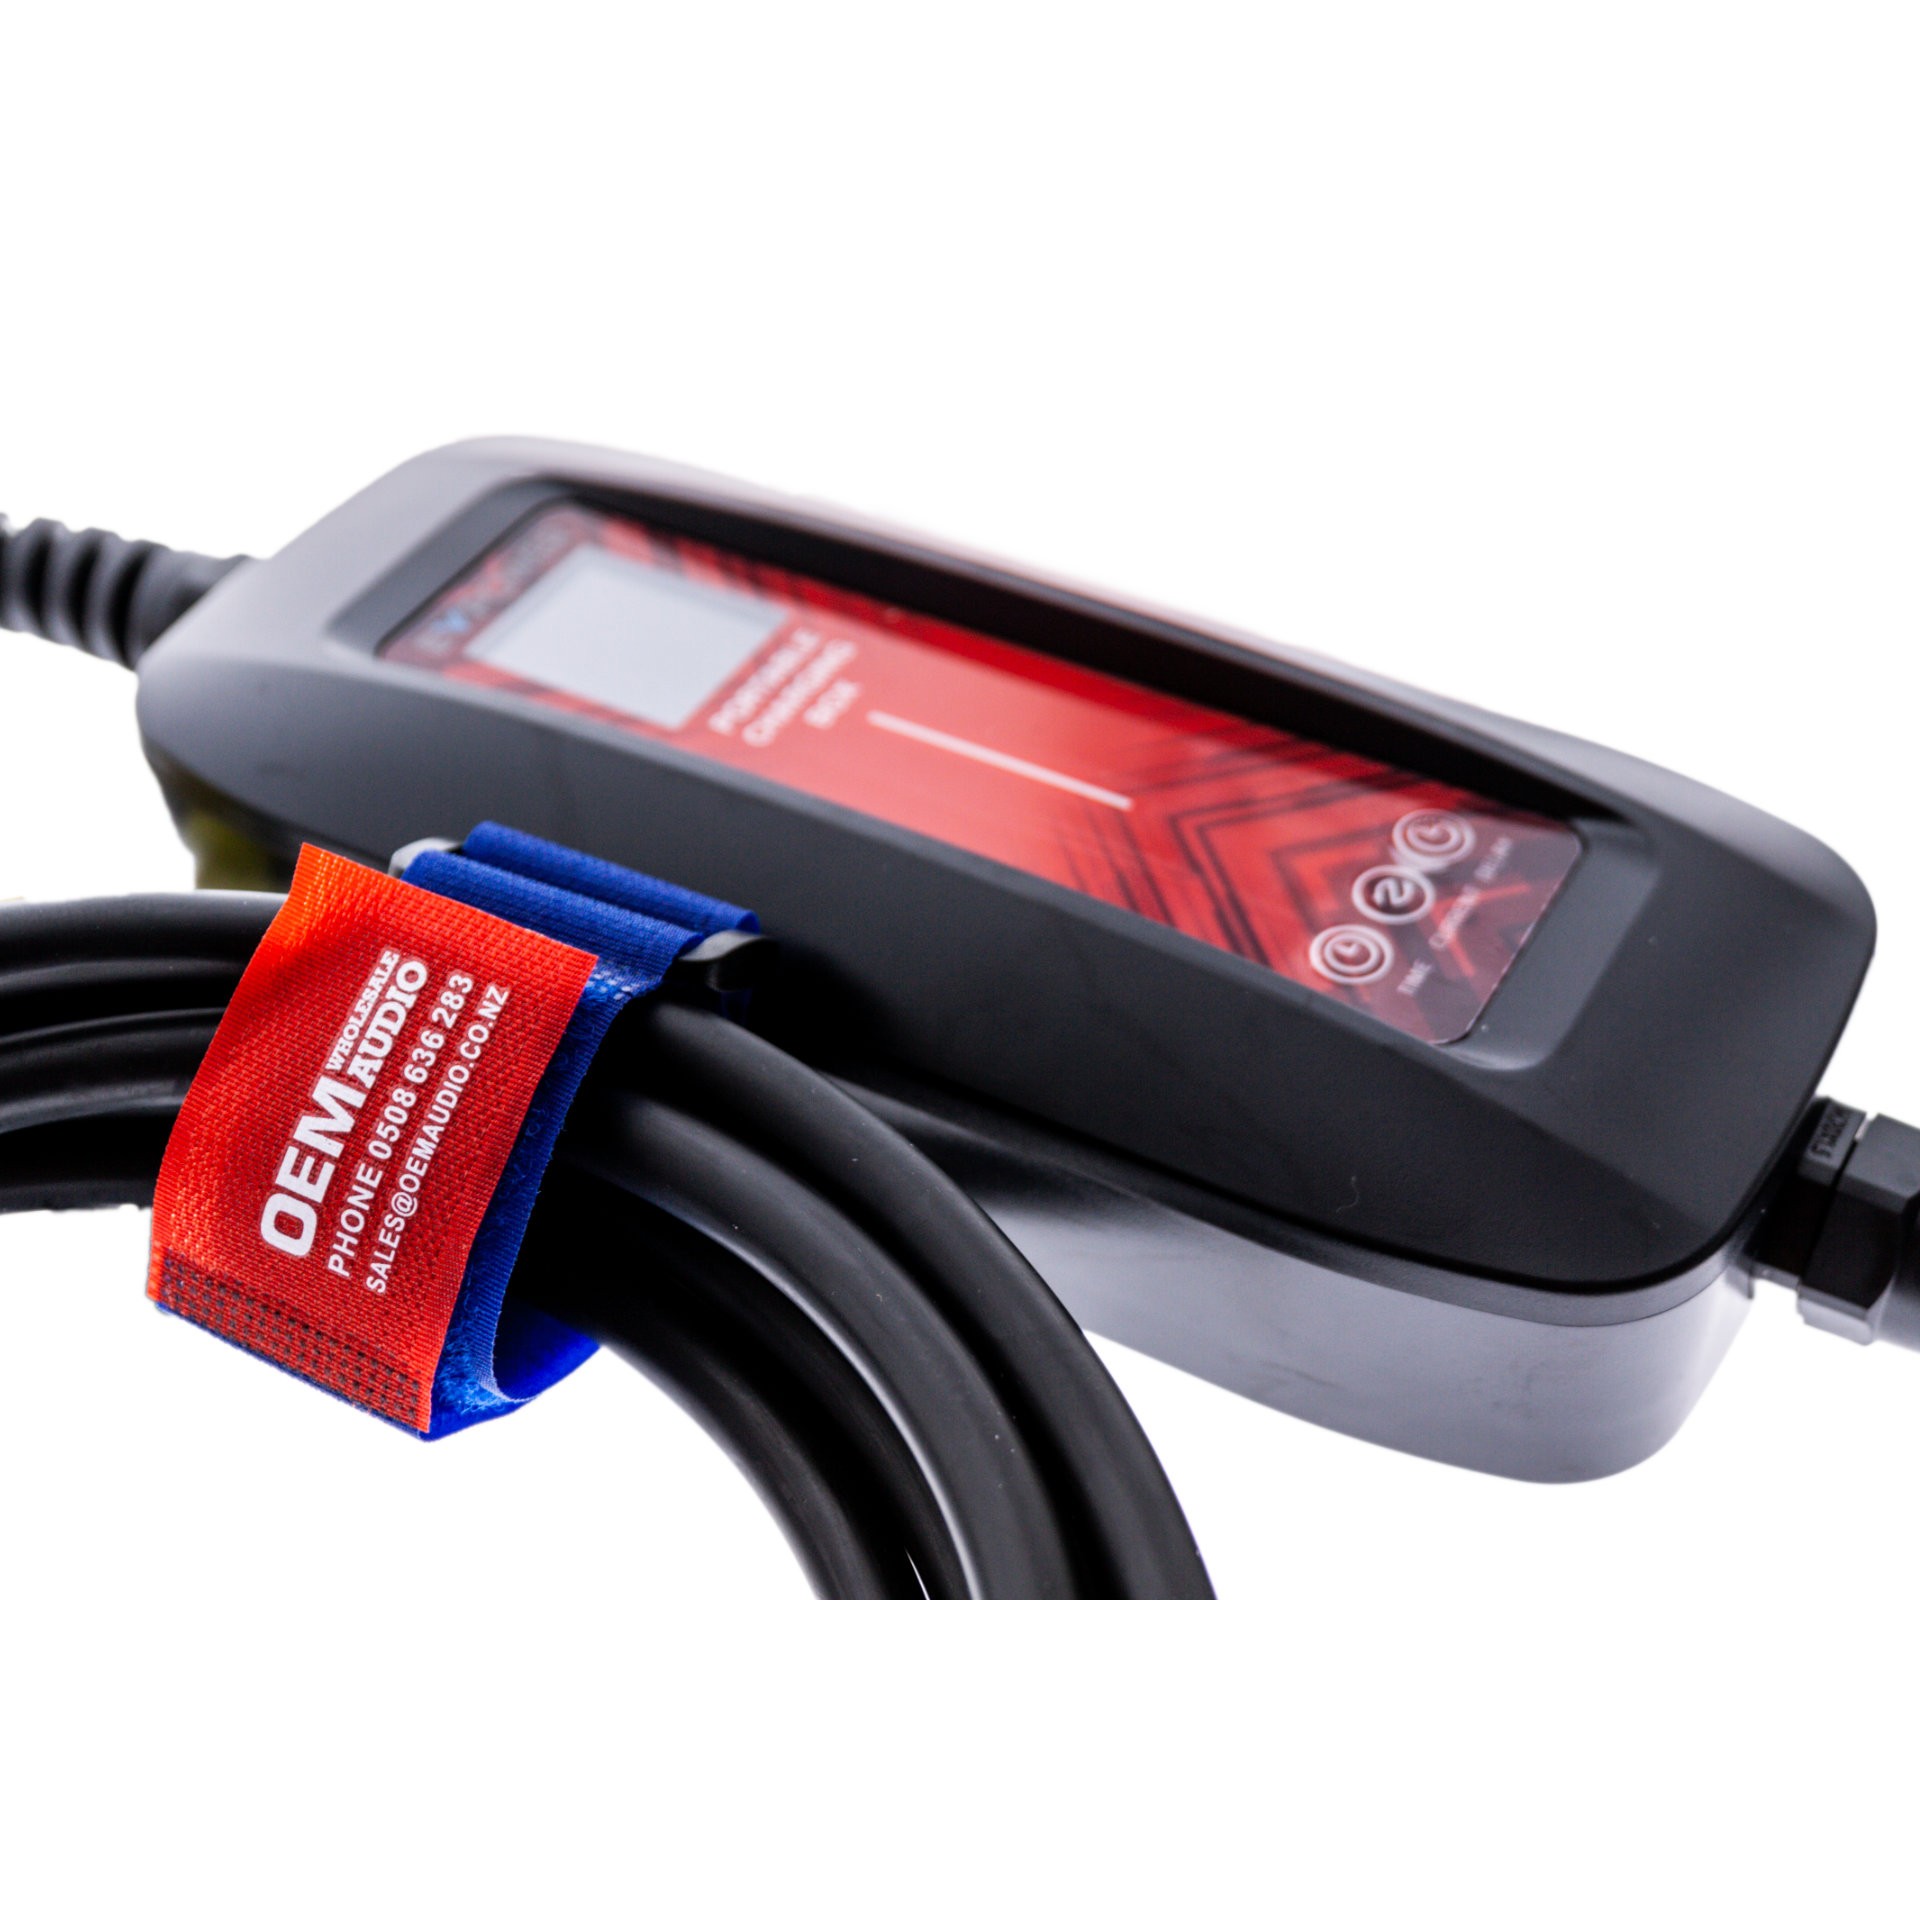 ev-power-type-1-premium-charging-cable-8-amp